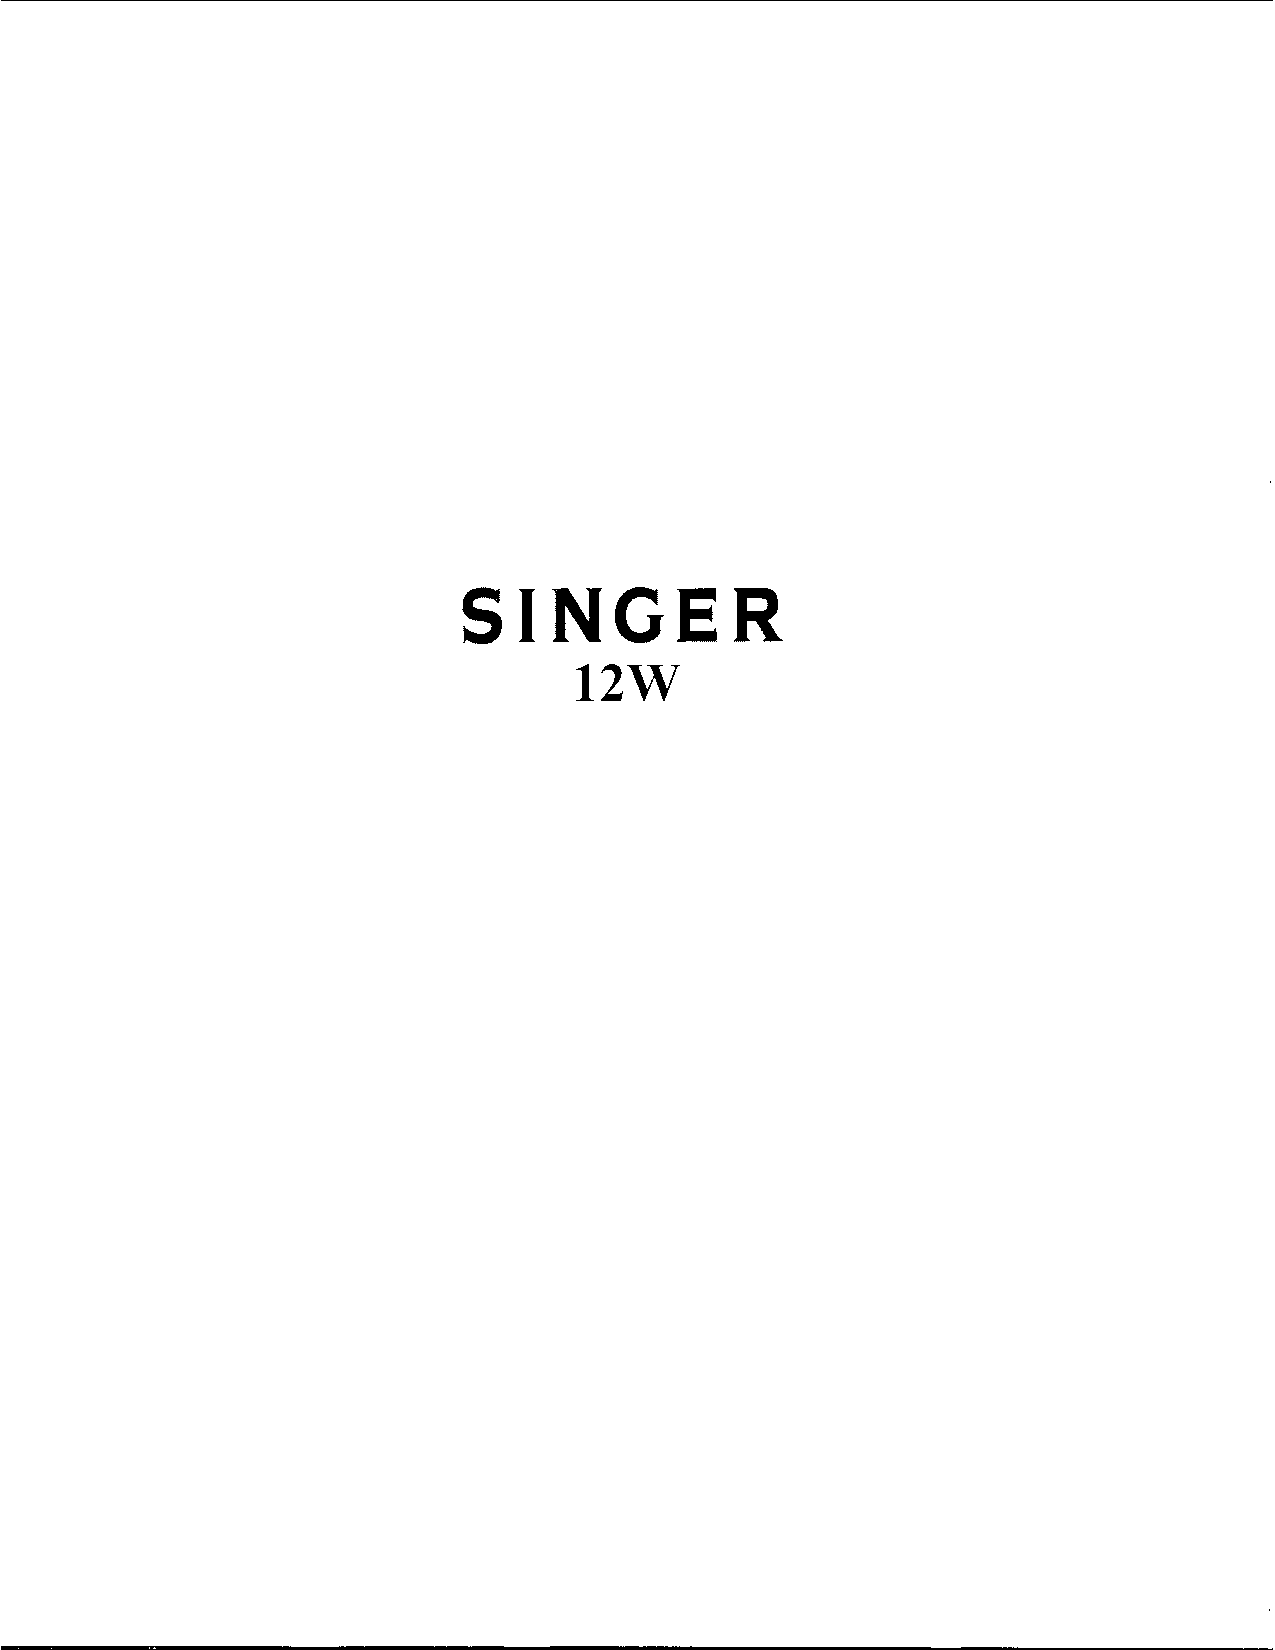 Singer 12W User Manual